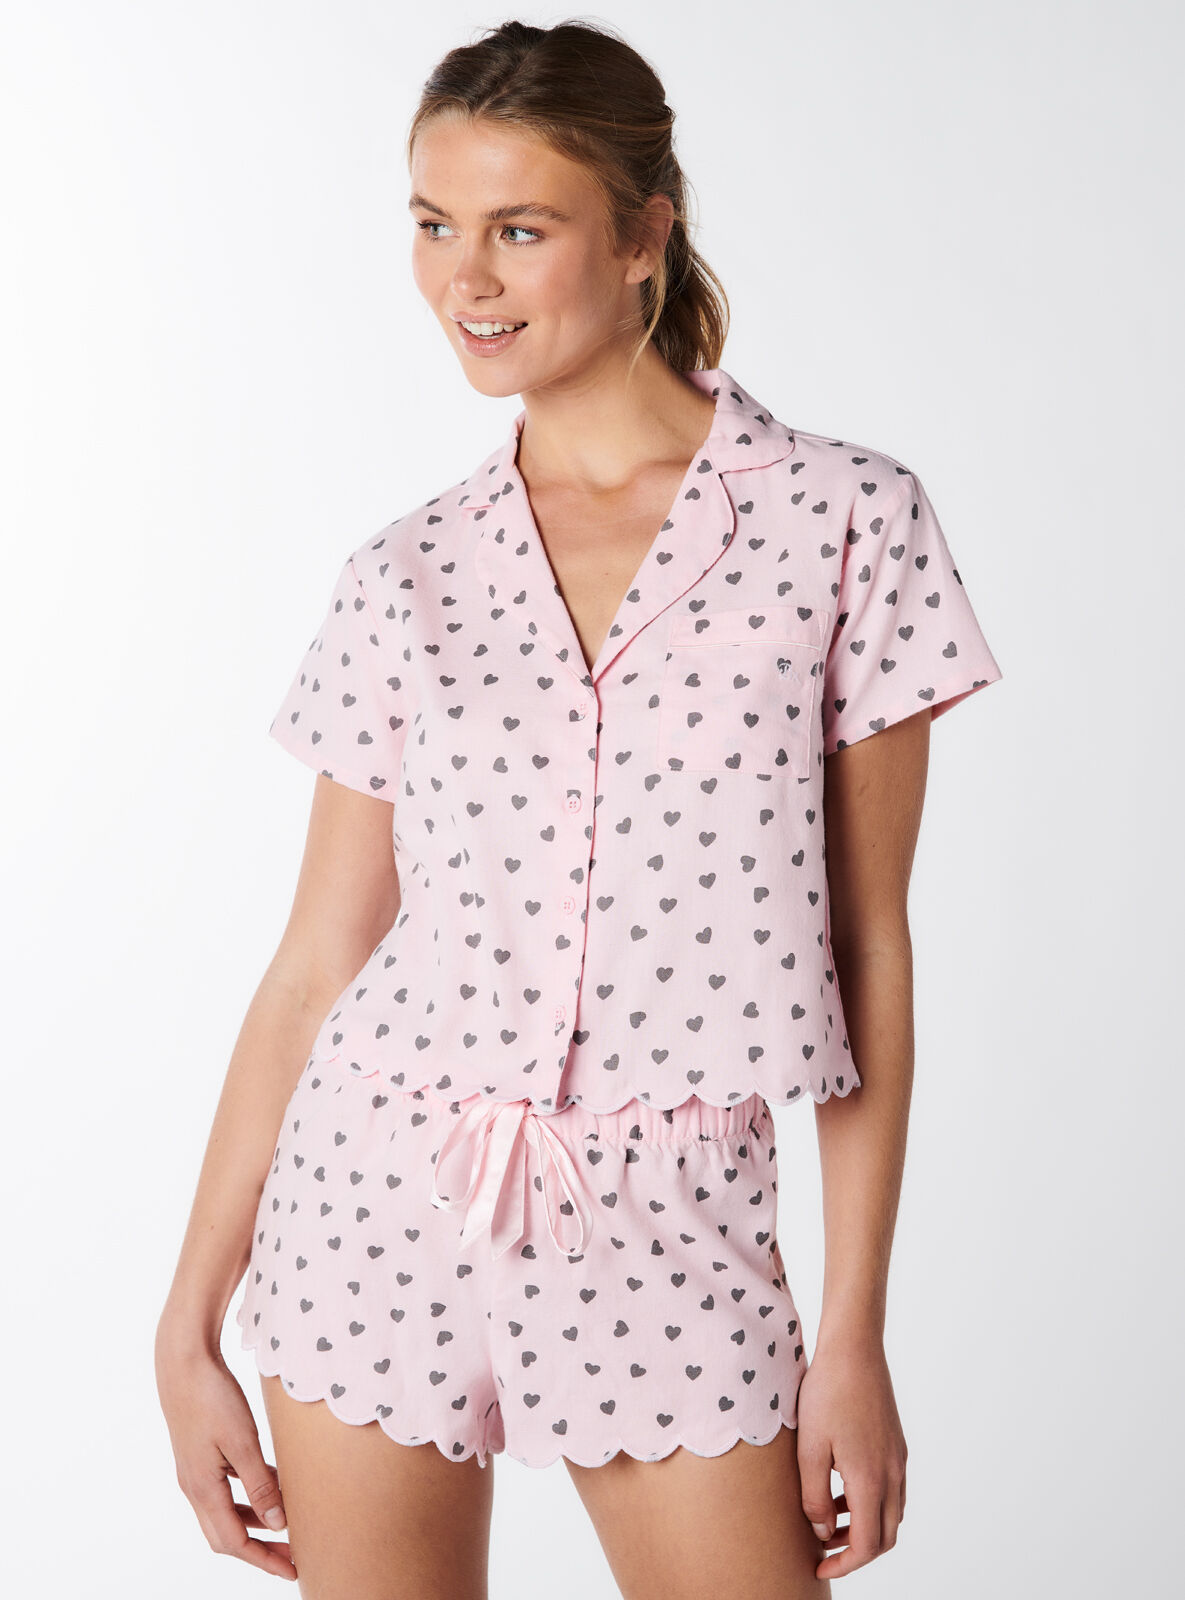 Boux Avenue Heart scallop cotton short pyjama set - Pink Mix - 12